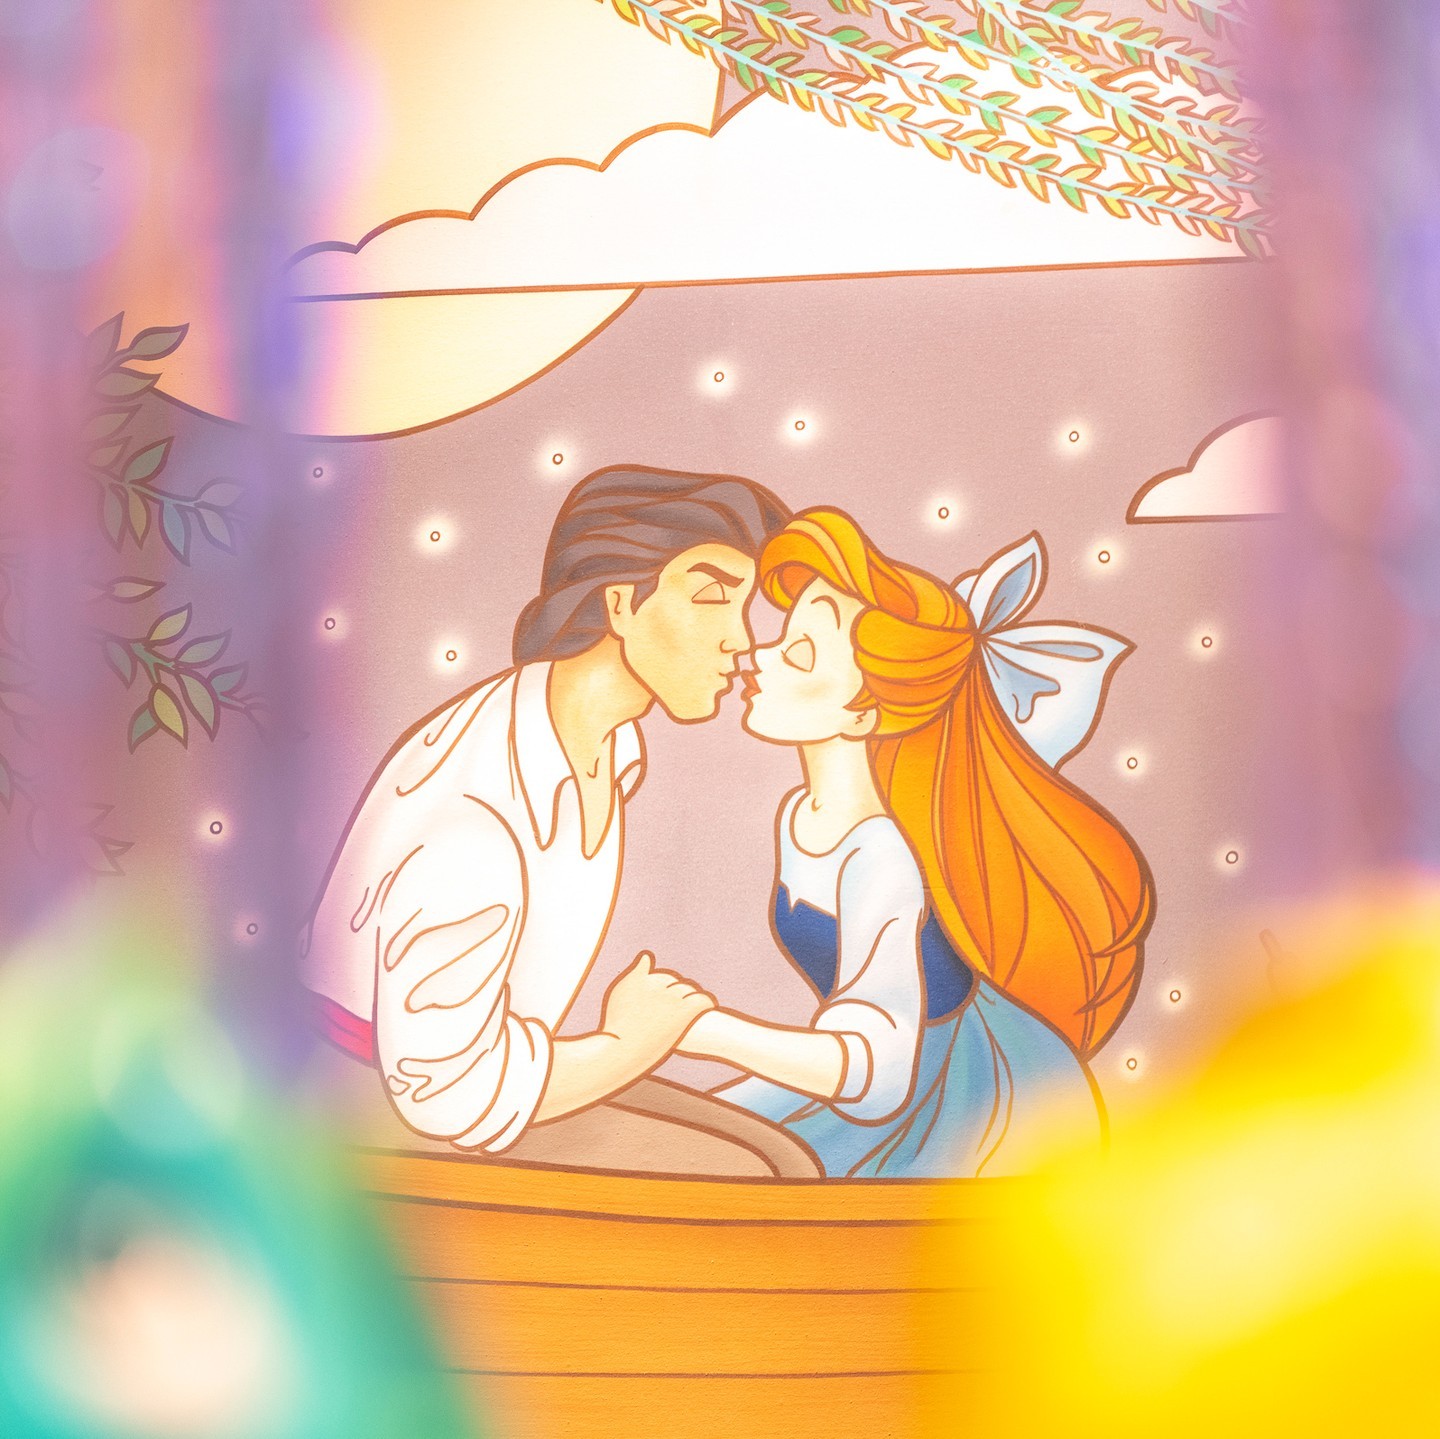 True romance♡
この幸せよ、永遠に
#ariel #princeeric #thelittlemermaid #kissdegirlfashions...的圖像